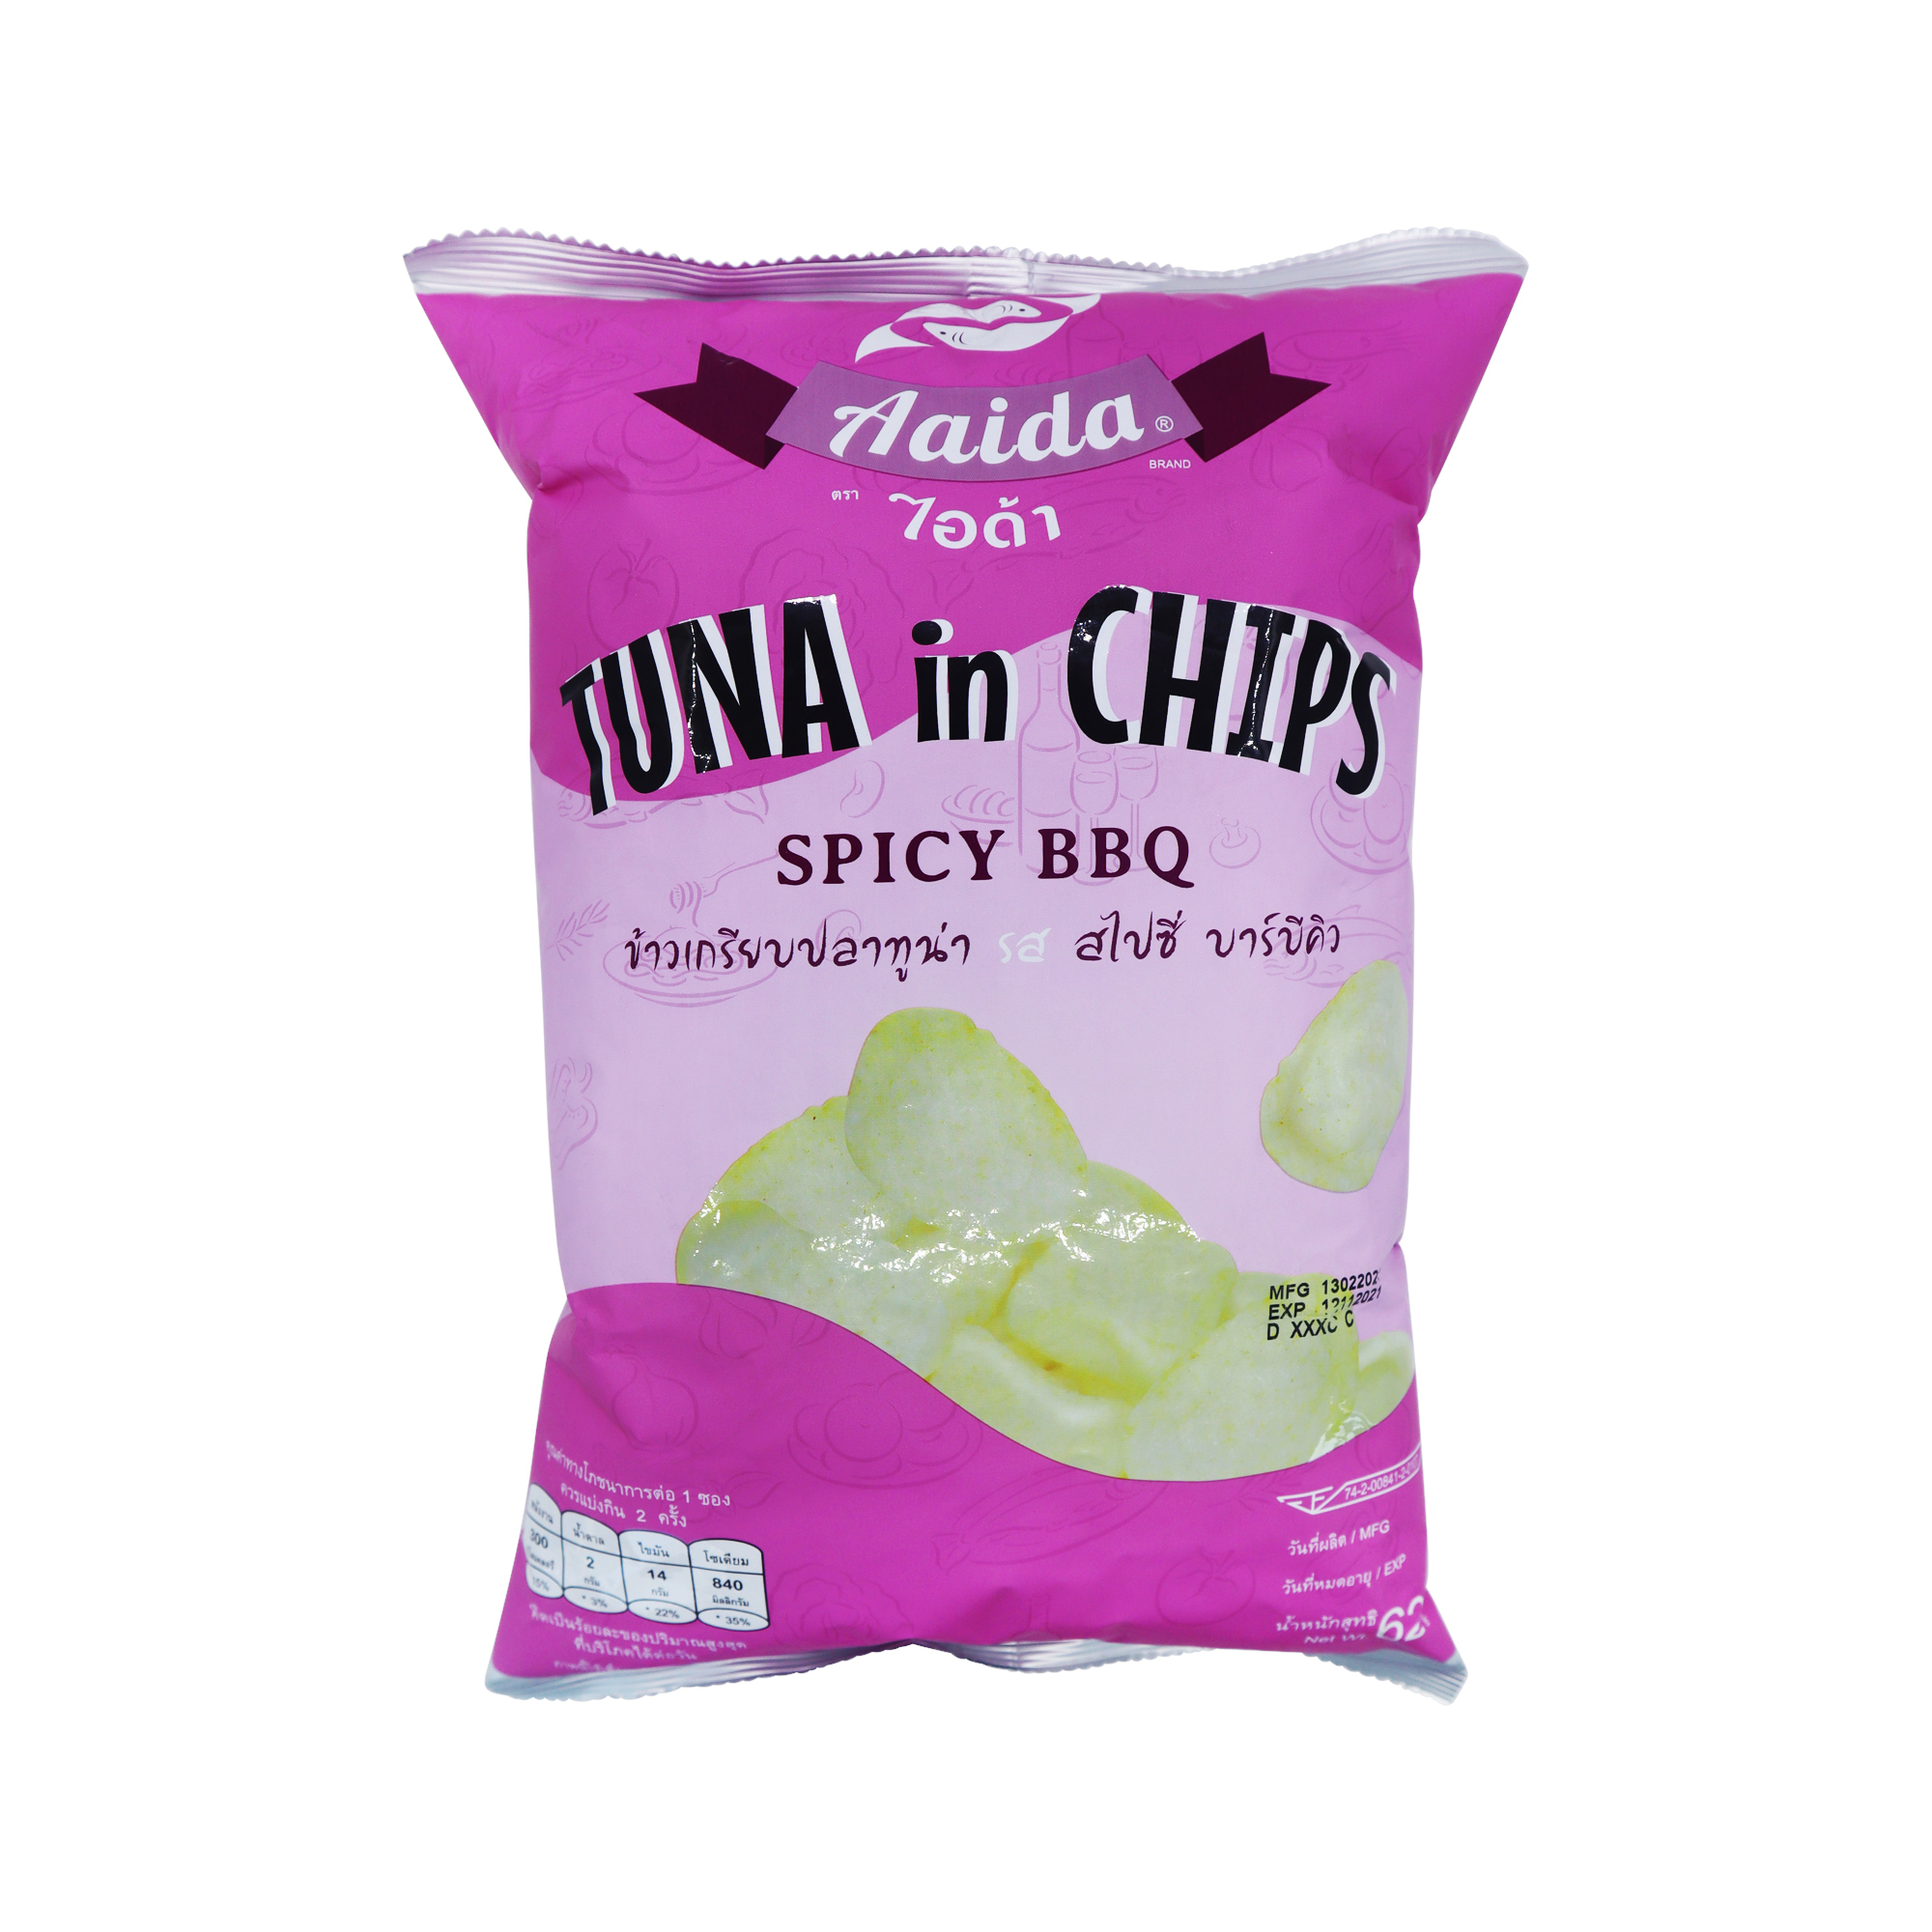 Aaida Tuna Chips Spicy BBQ Flavour 62g